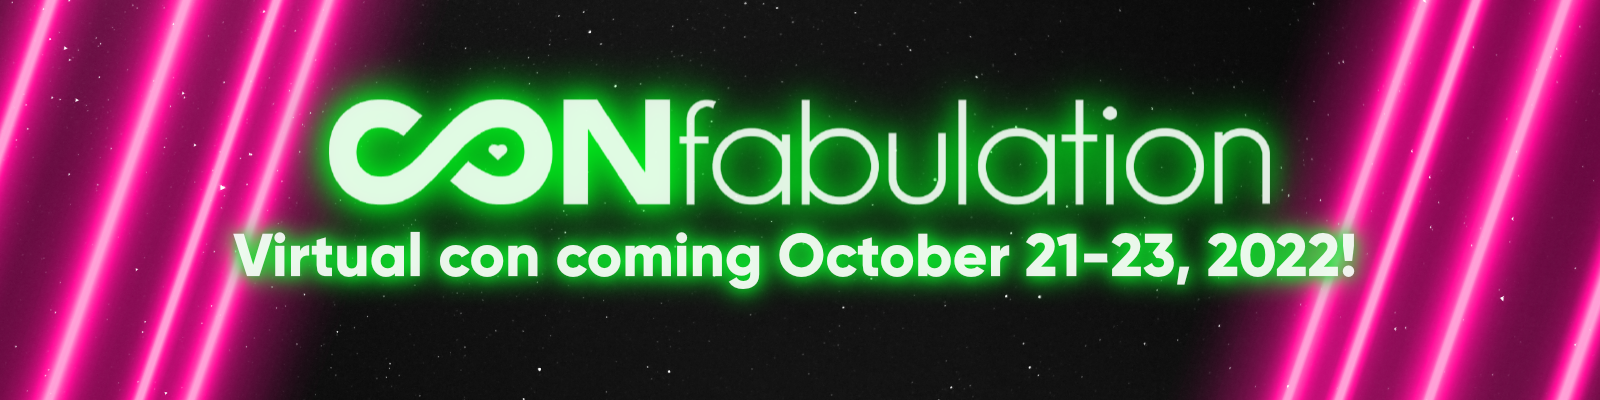 CONfabulation: Virtual Con coming October 21-23, 2022!